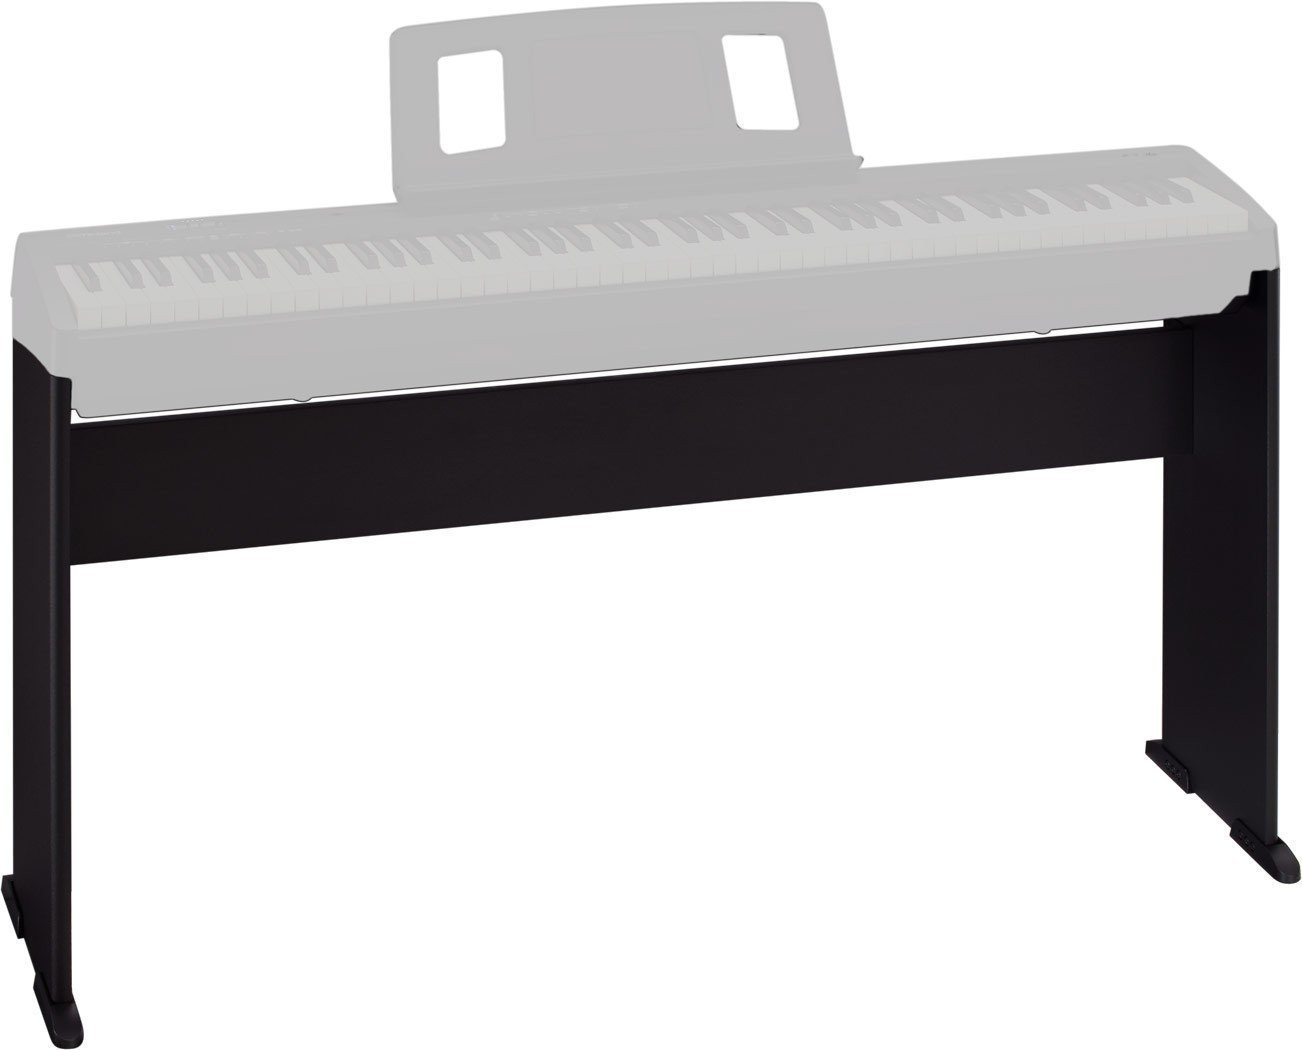 Wooden keyboard stand
 Roland KSCFP10 Black